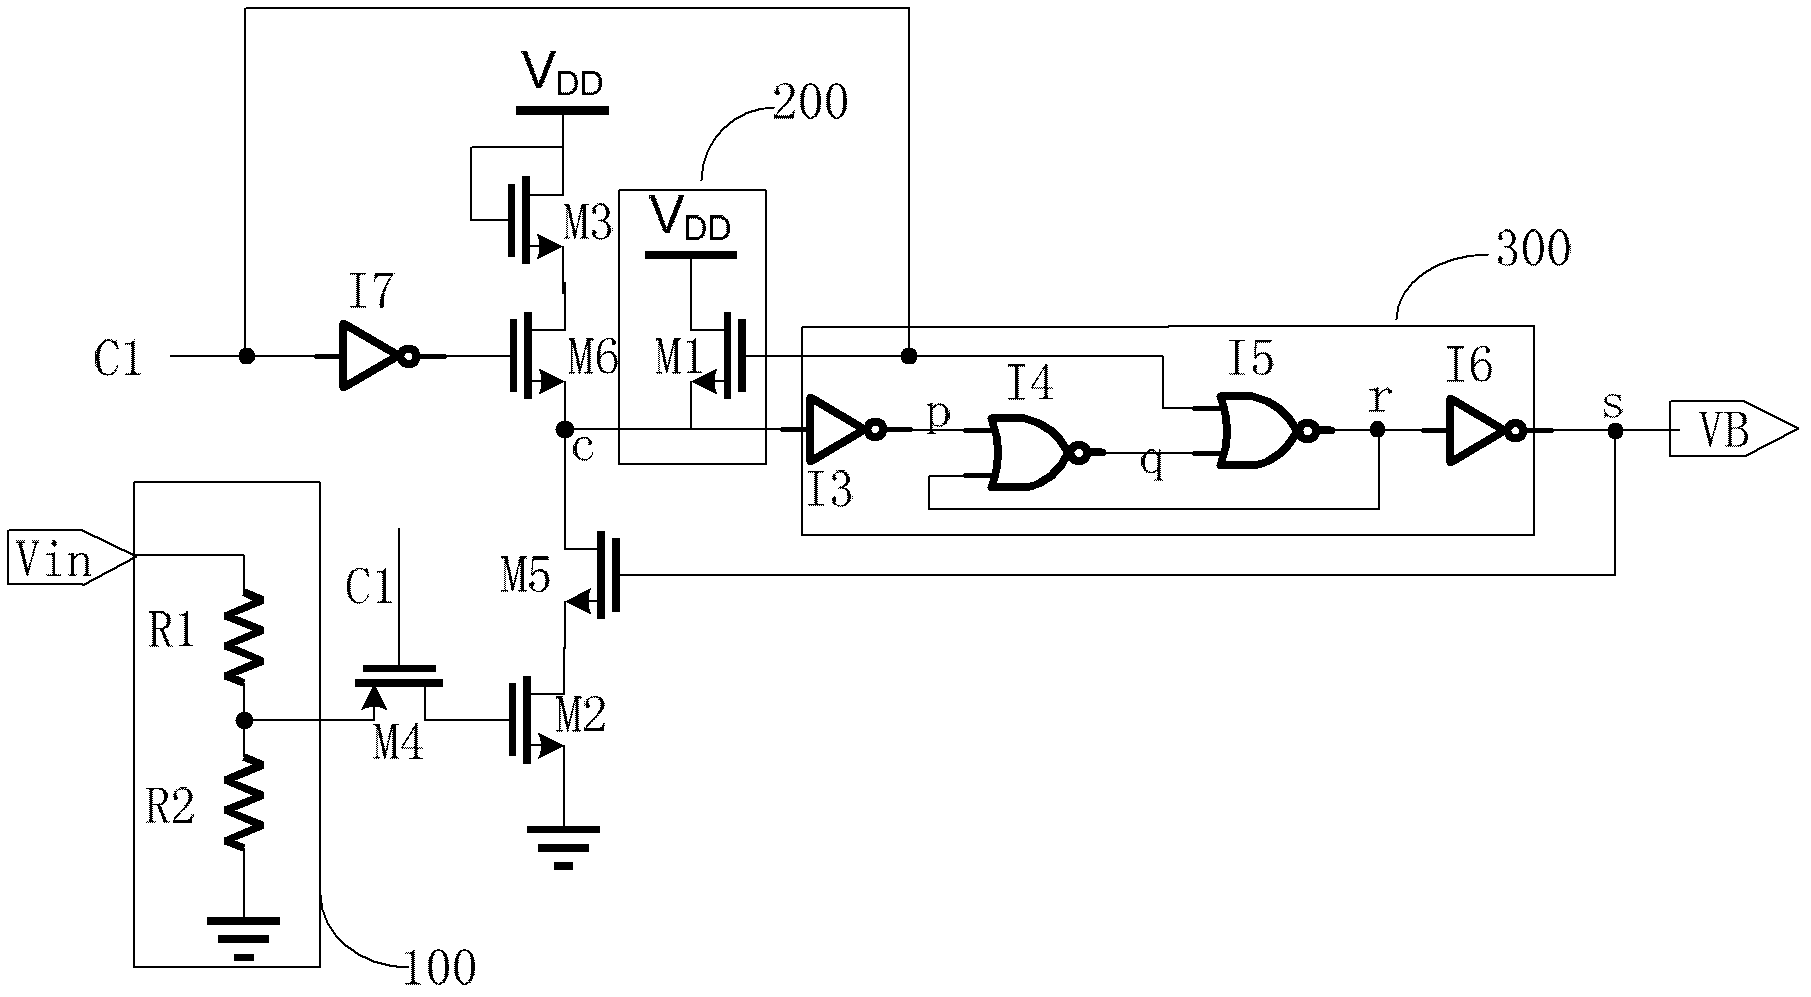 Overvoltage detection circuit